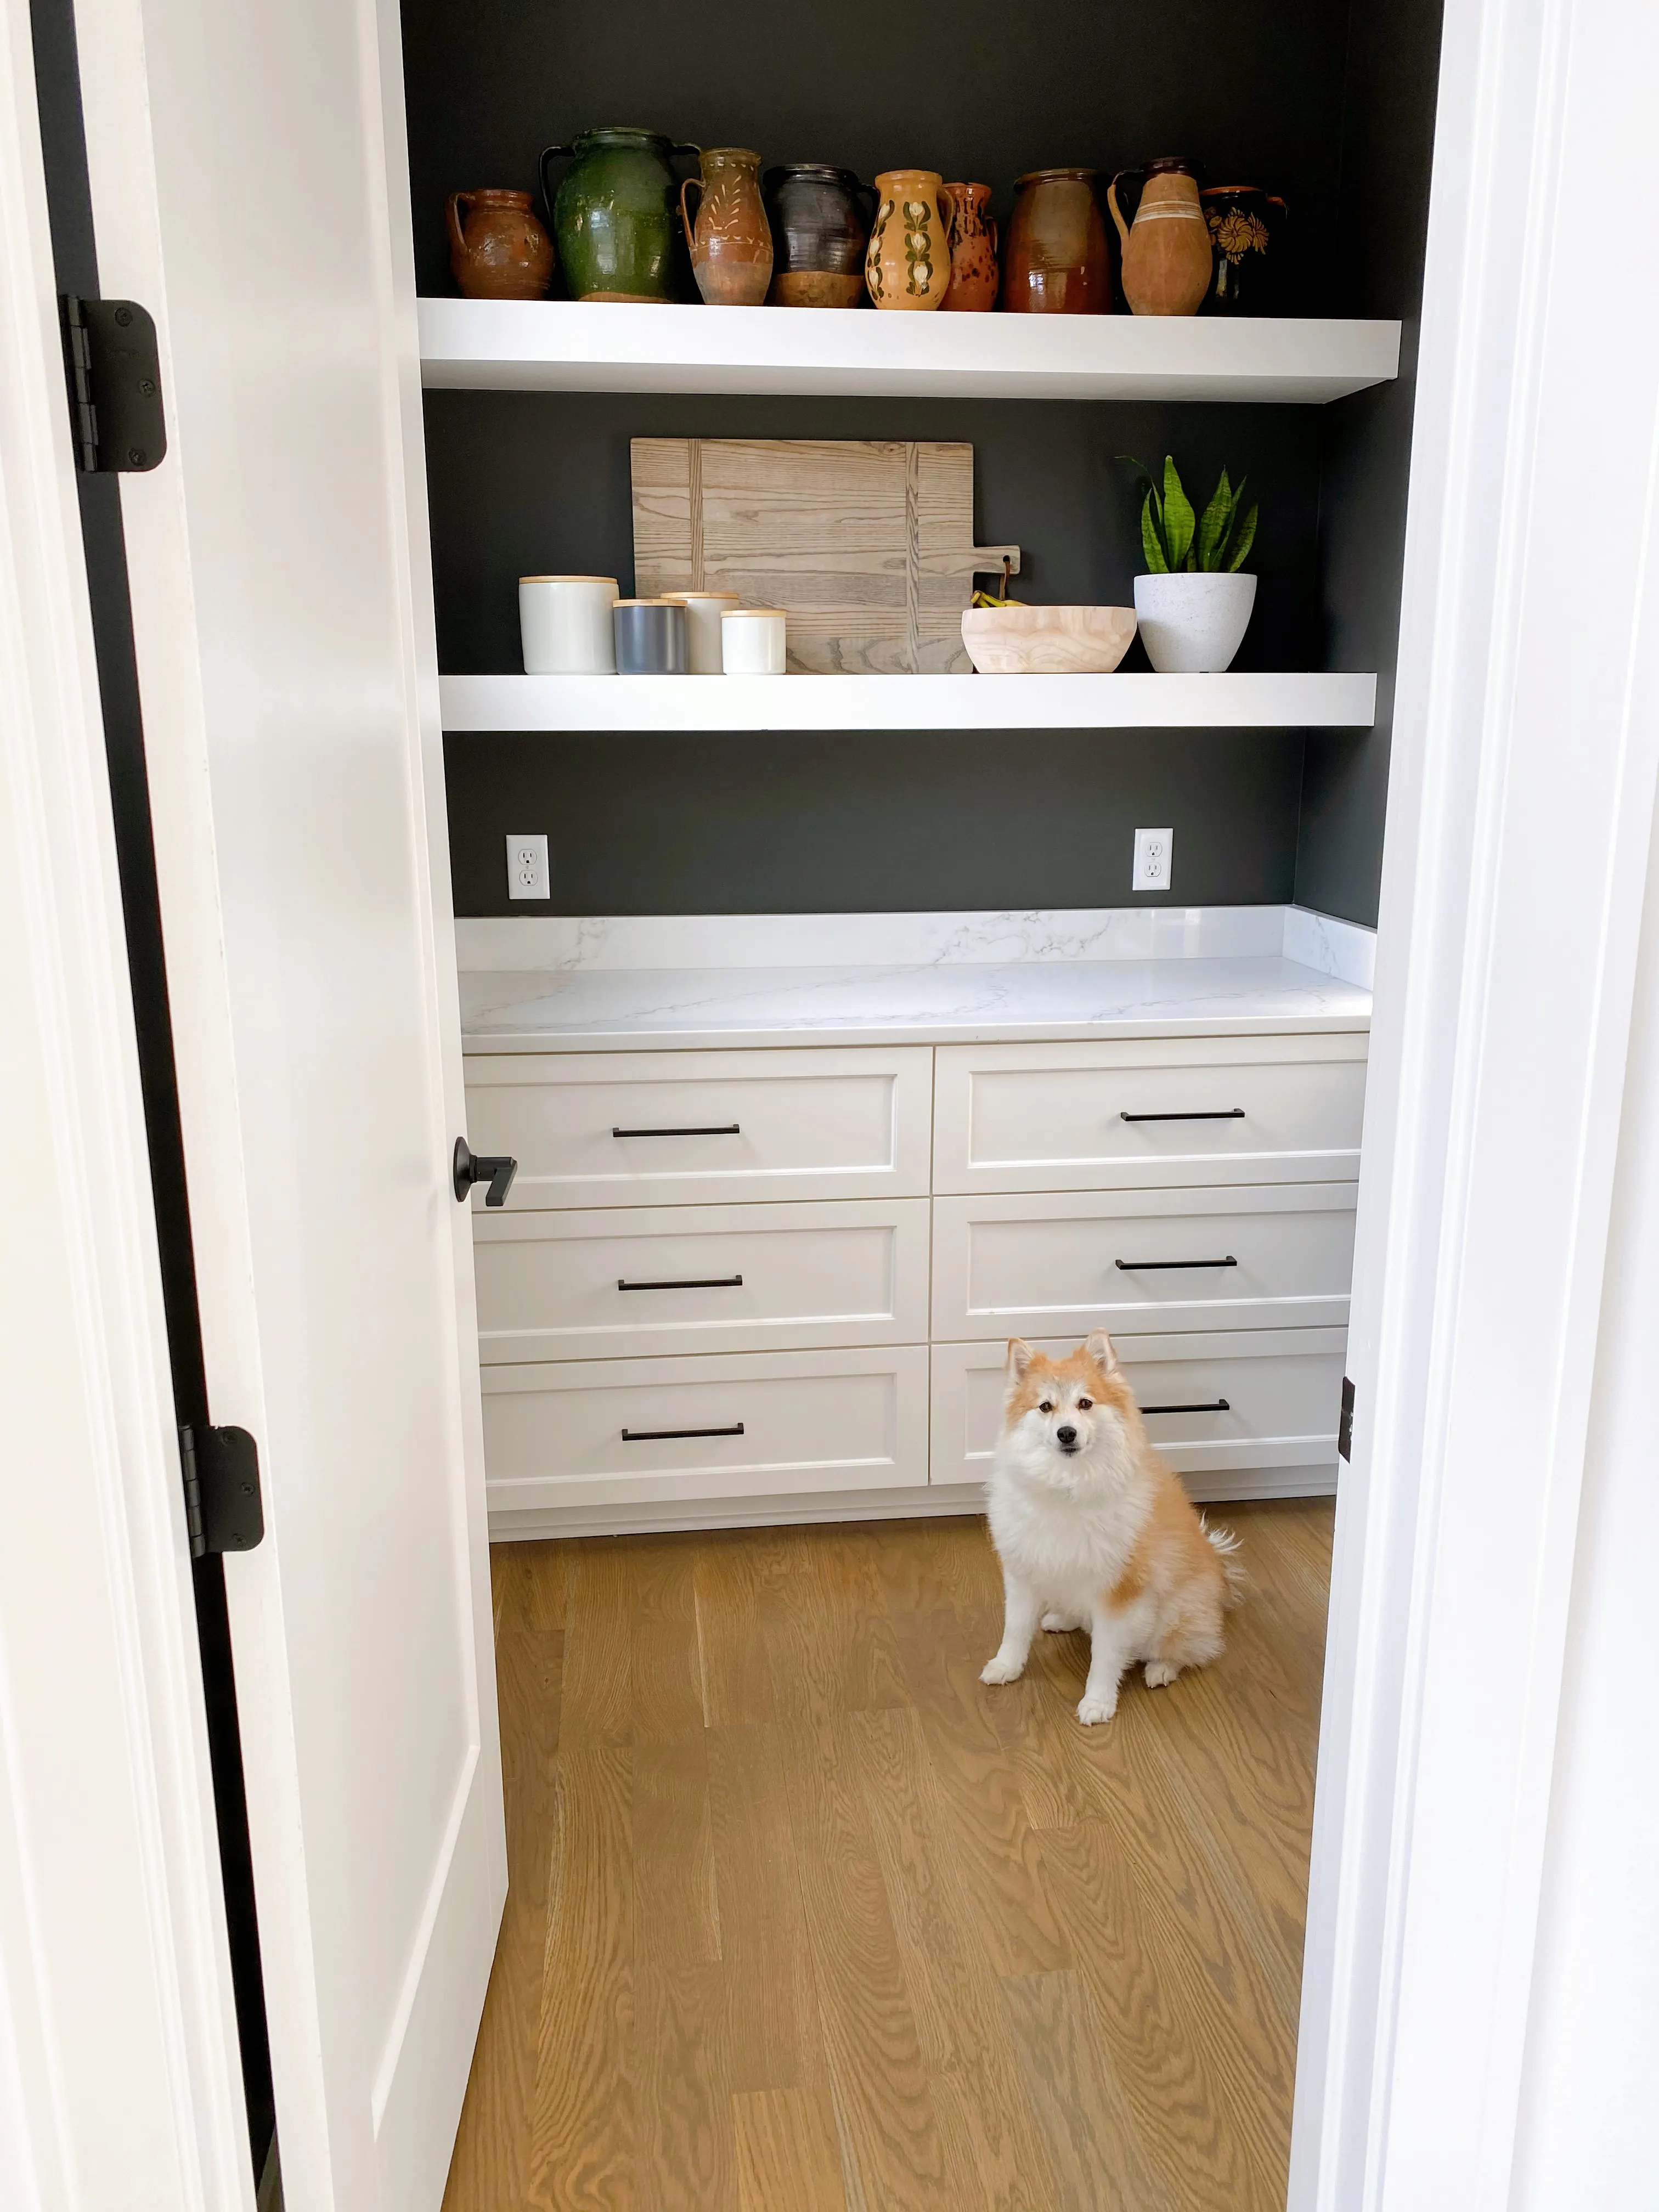 Dog sitting in pantry